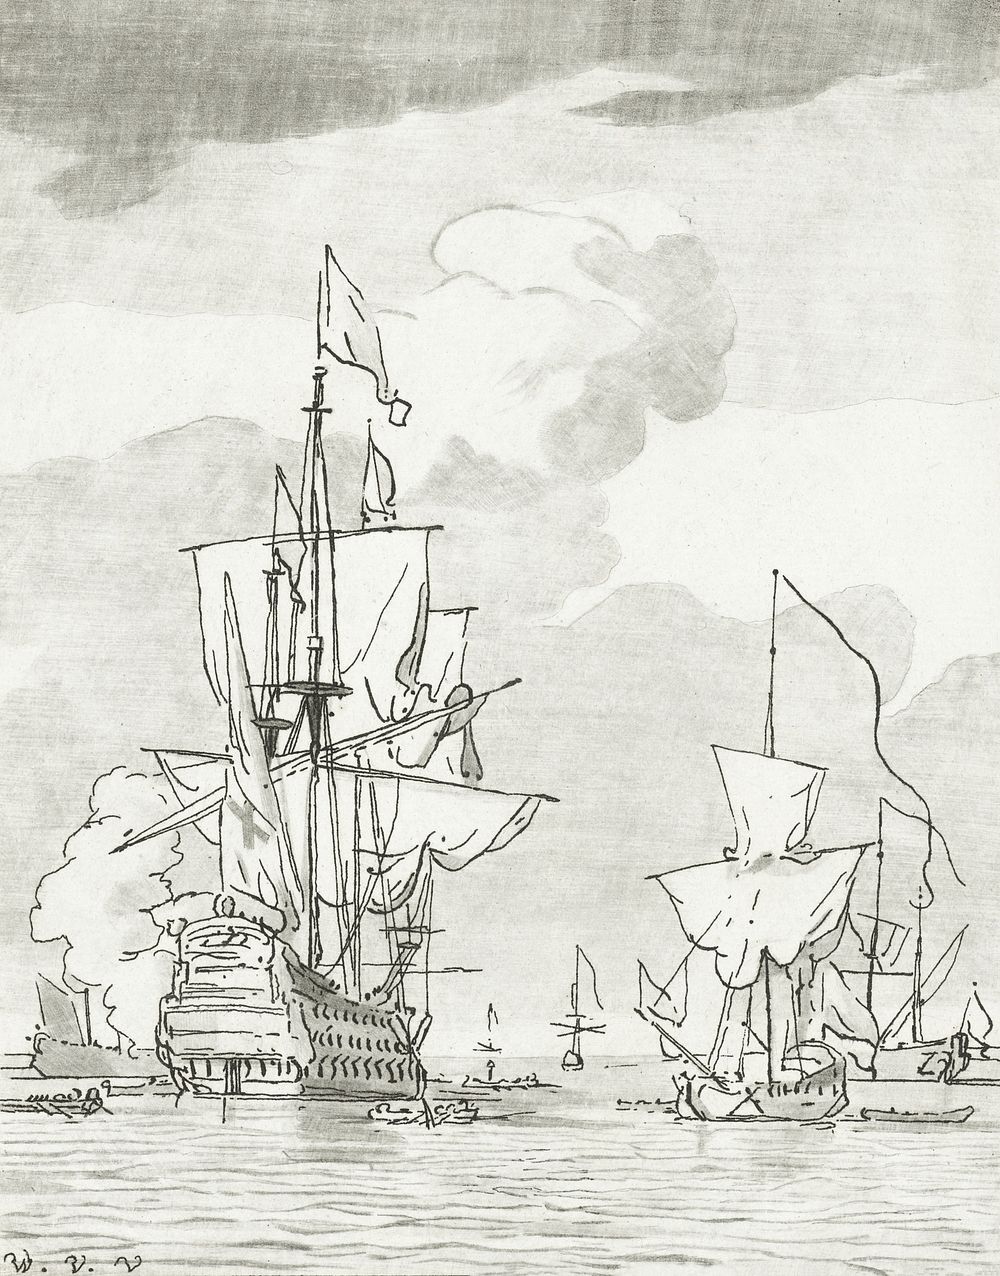 Oorlogsschip een schot lossend (1759) by Cornelis Ploos van Amstel. Original from The Rijksmuseum. Digitally enhanced by…